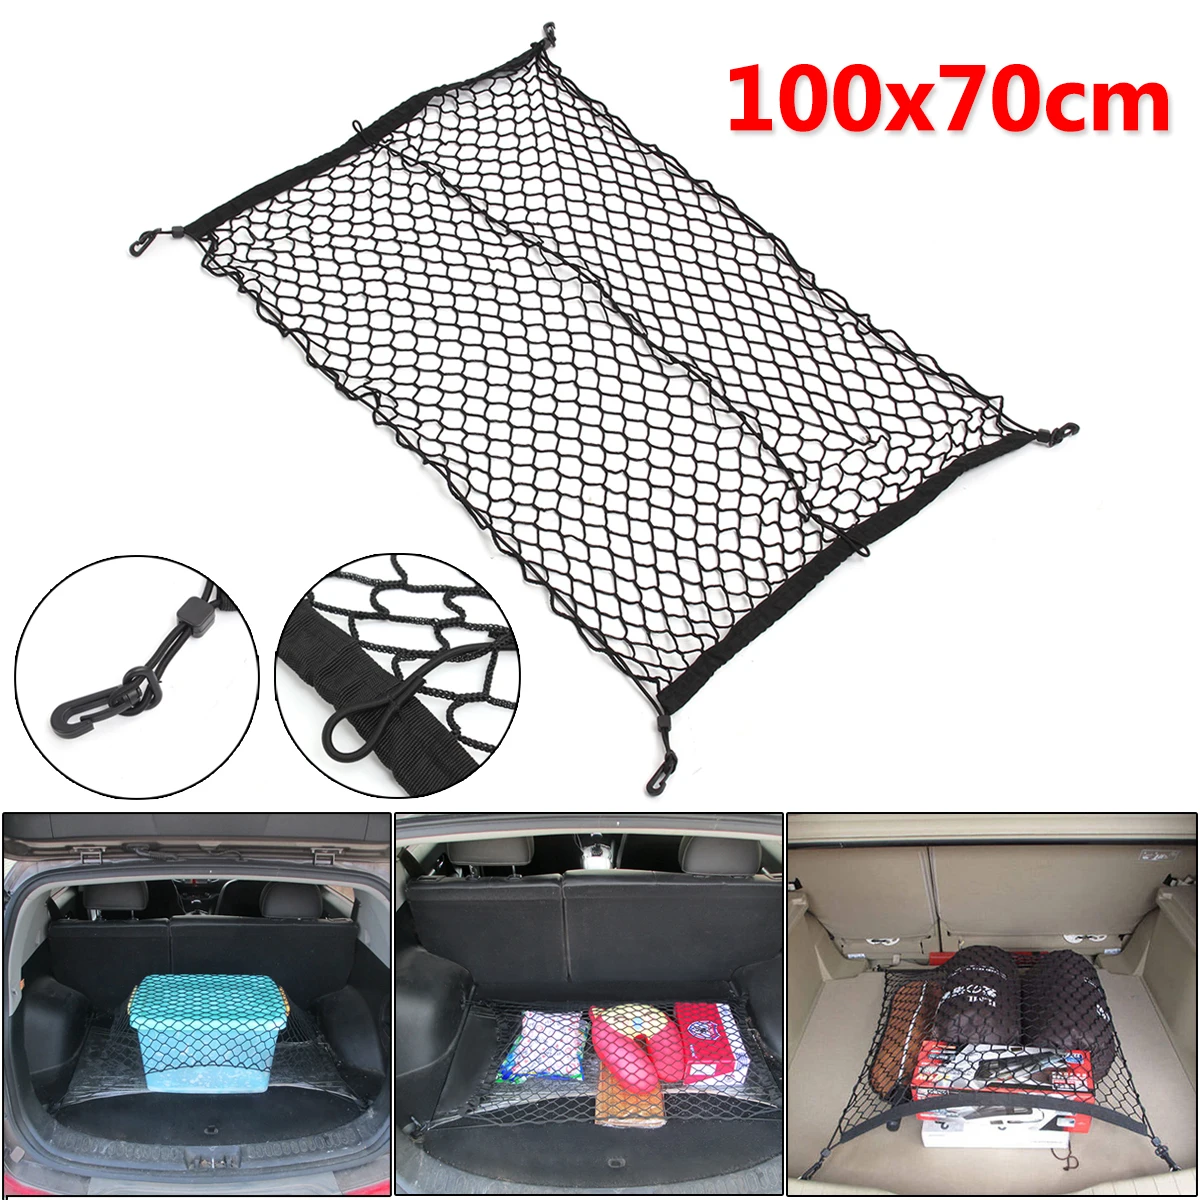 Red Universal negra de nailon para maletero de coche, organizador de almacenamiento de equipaje, bolsa, red de malla trasera con 4 ganchos, 100x70cm